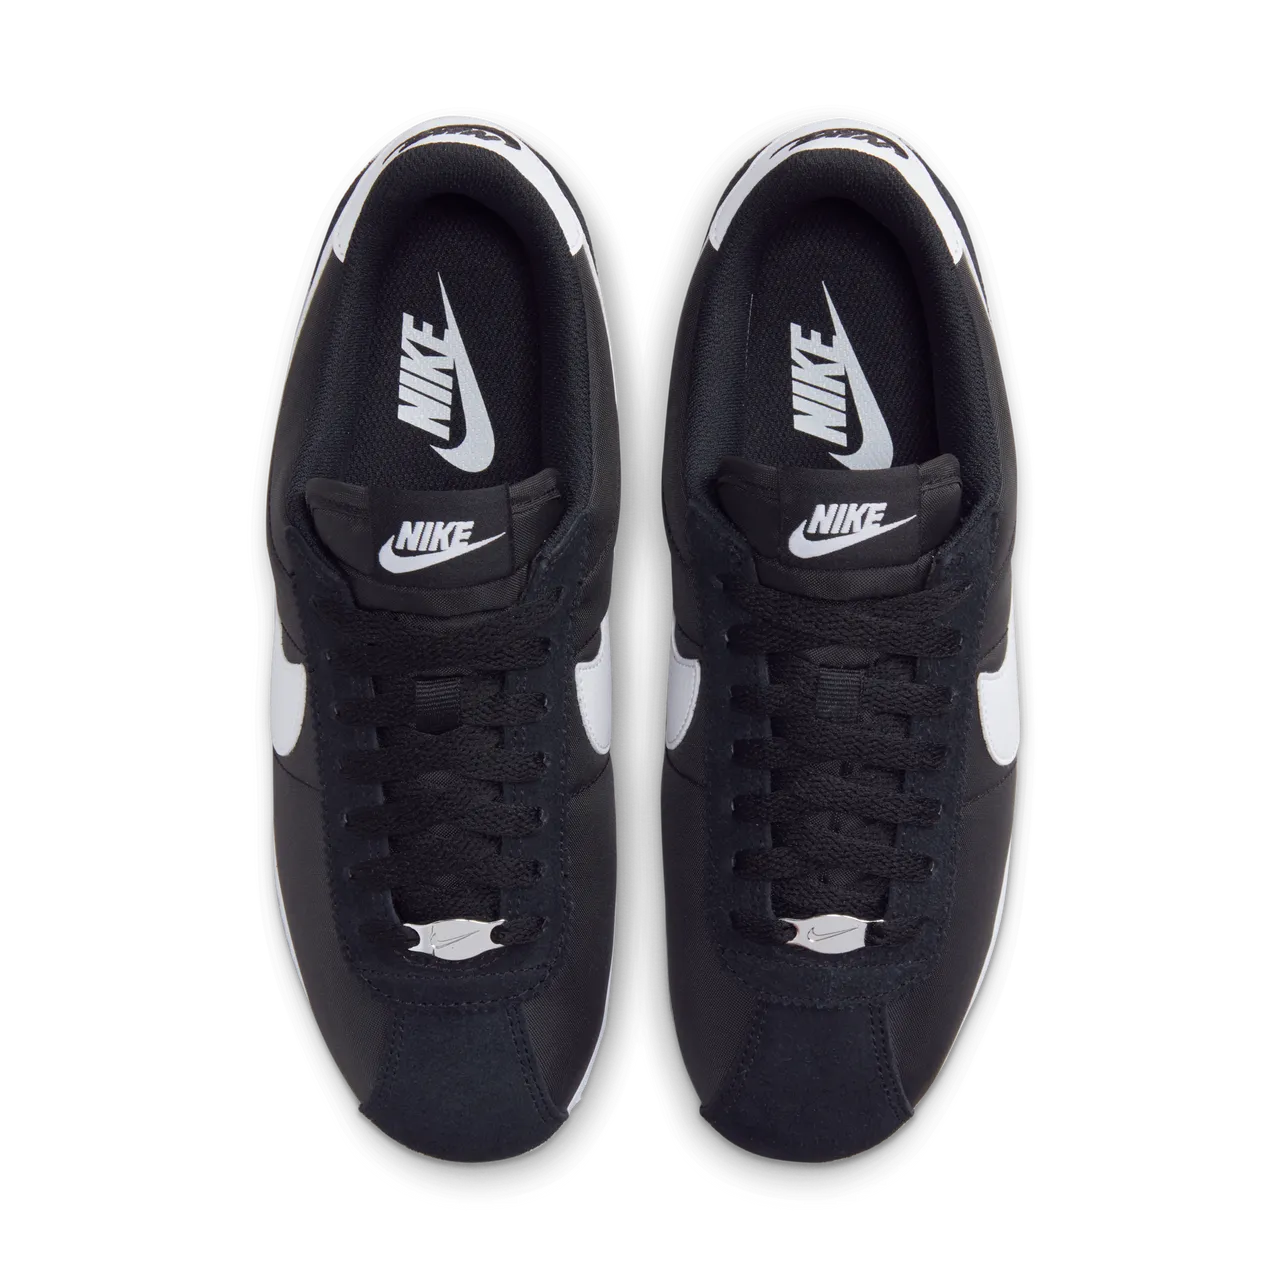 Nike Cortez Women's Shoes - Black